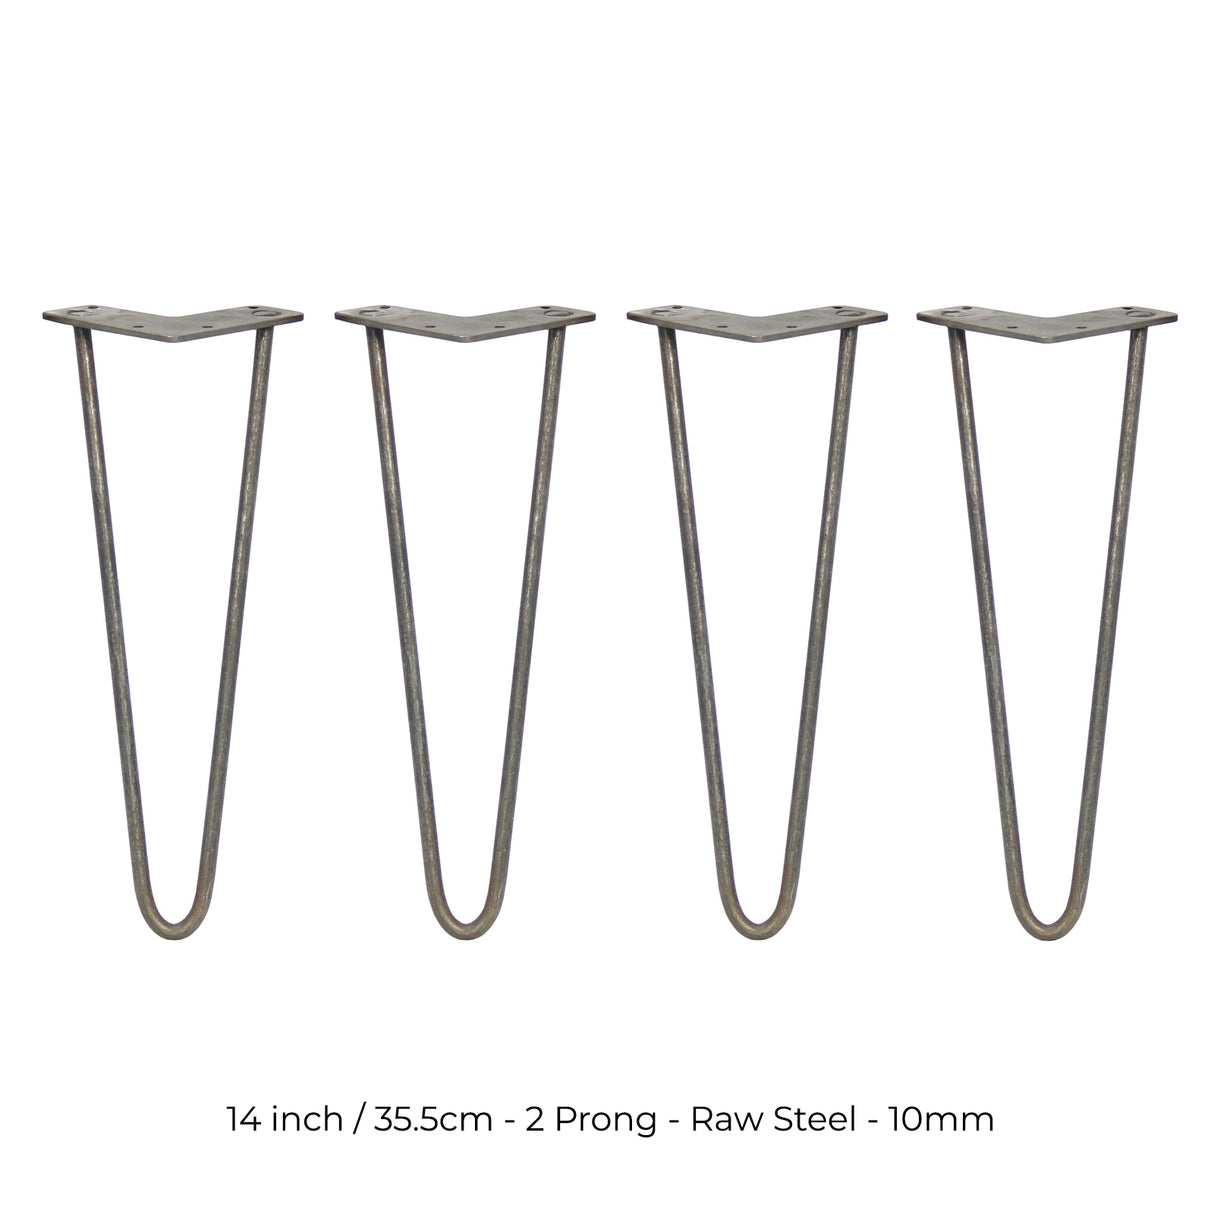 4 x 14" Hairpin Legs - 2 Prong - 10mm - Raw Steel